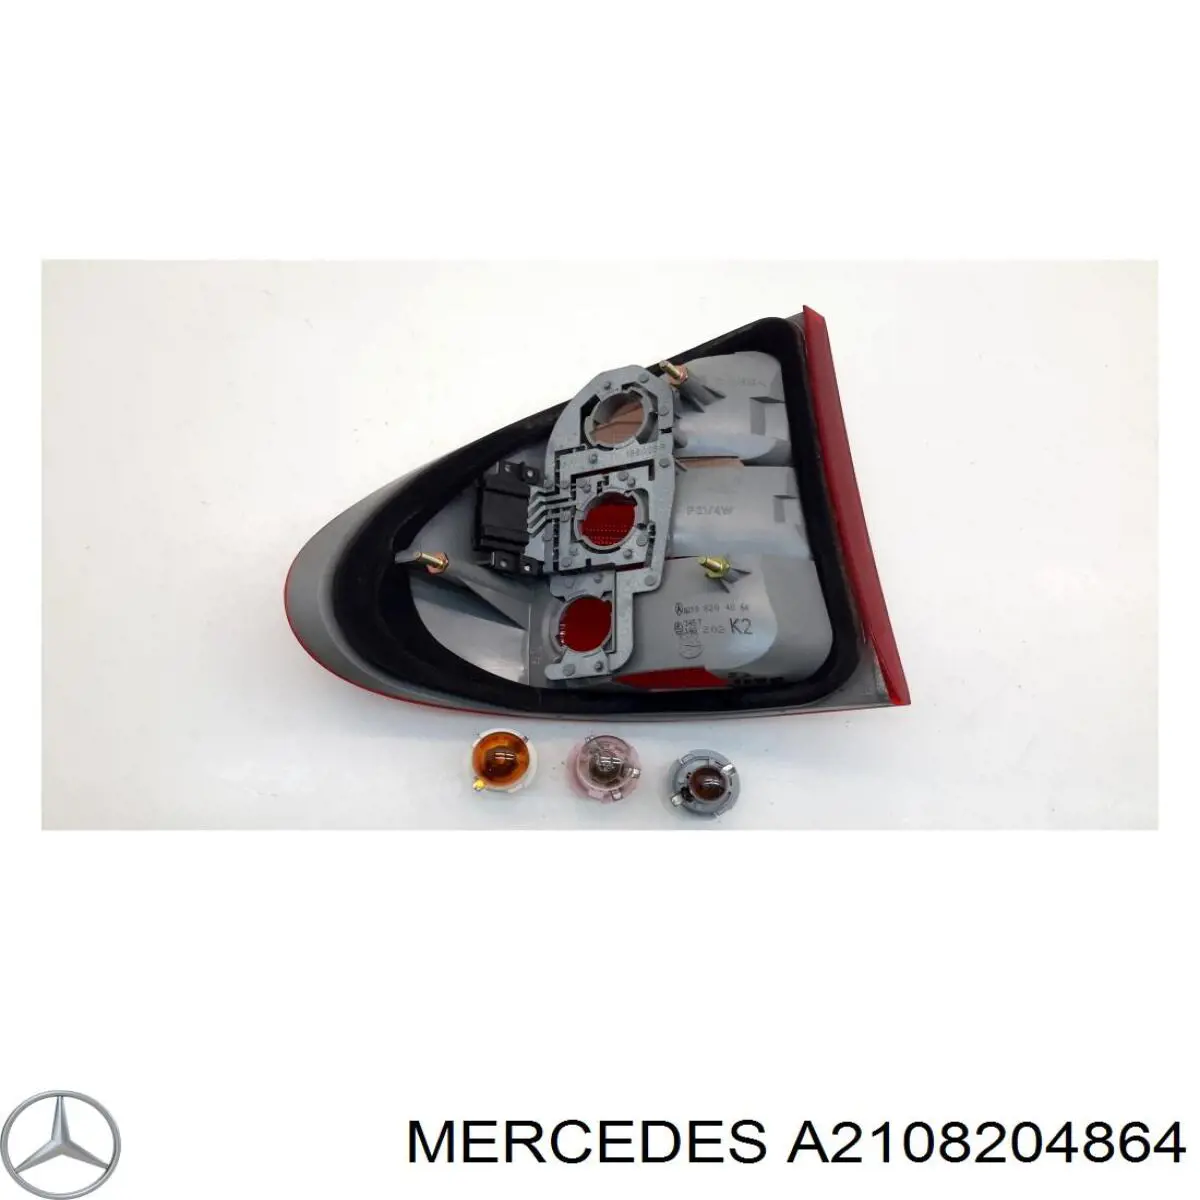 2108204864 Mercedes piloto posterior exterior derecho